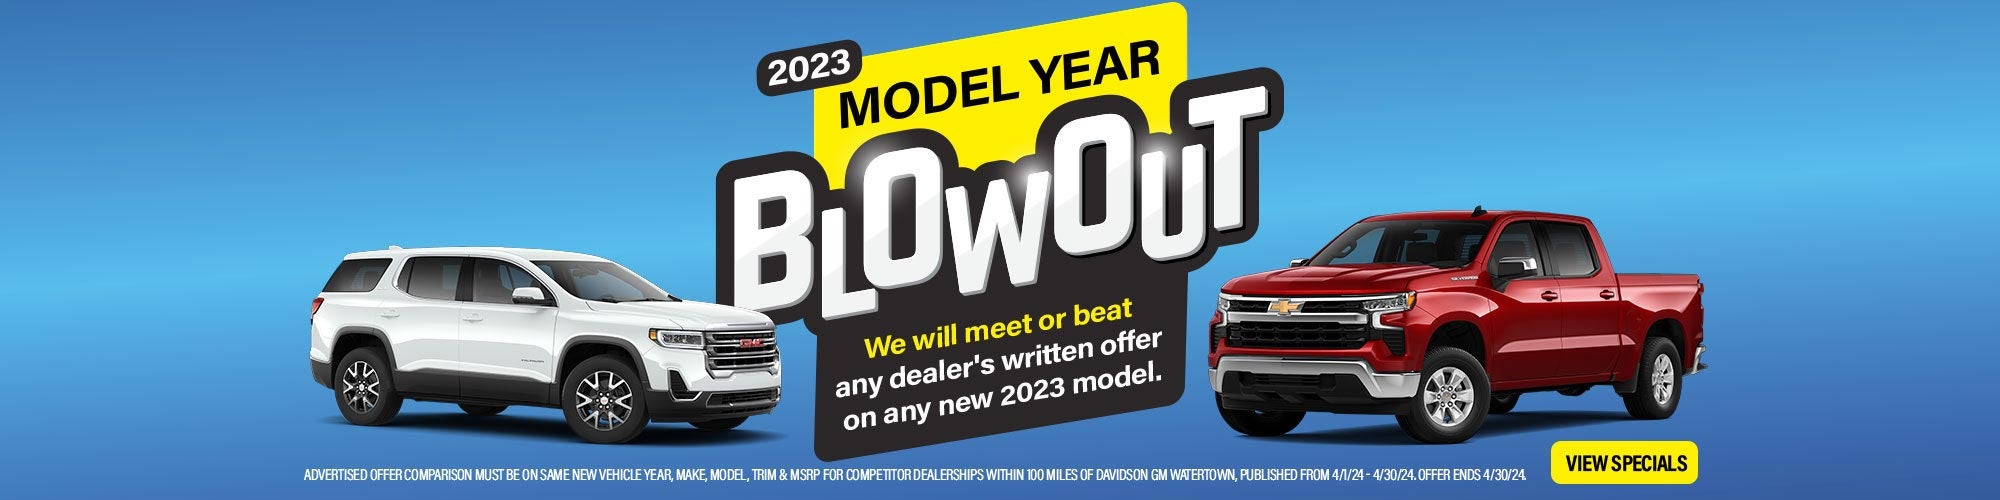 2023 Model Year Blowout